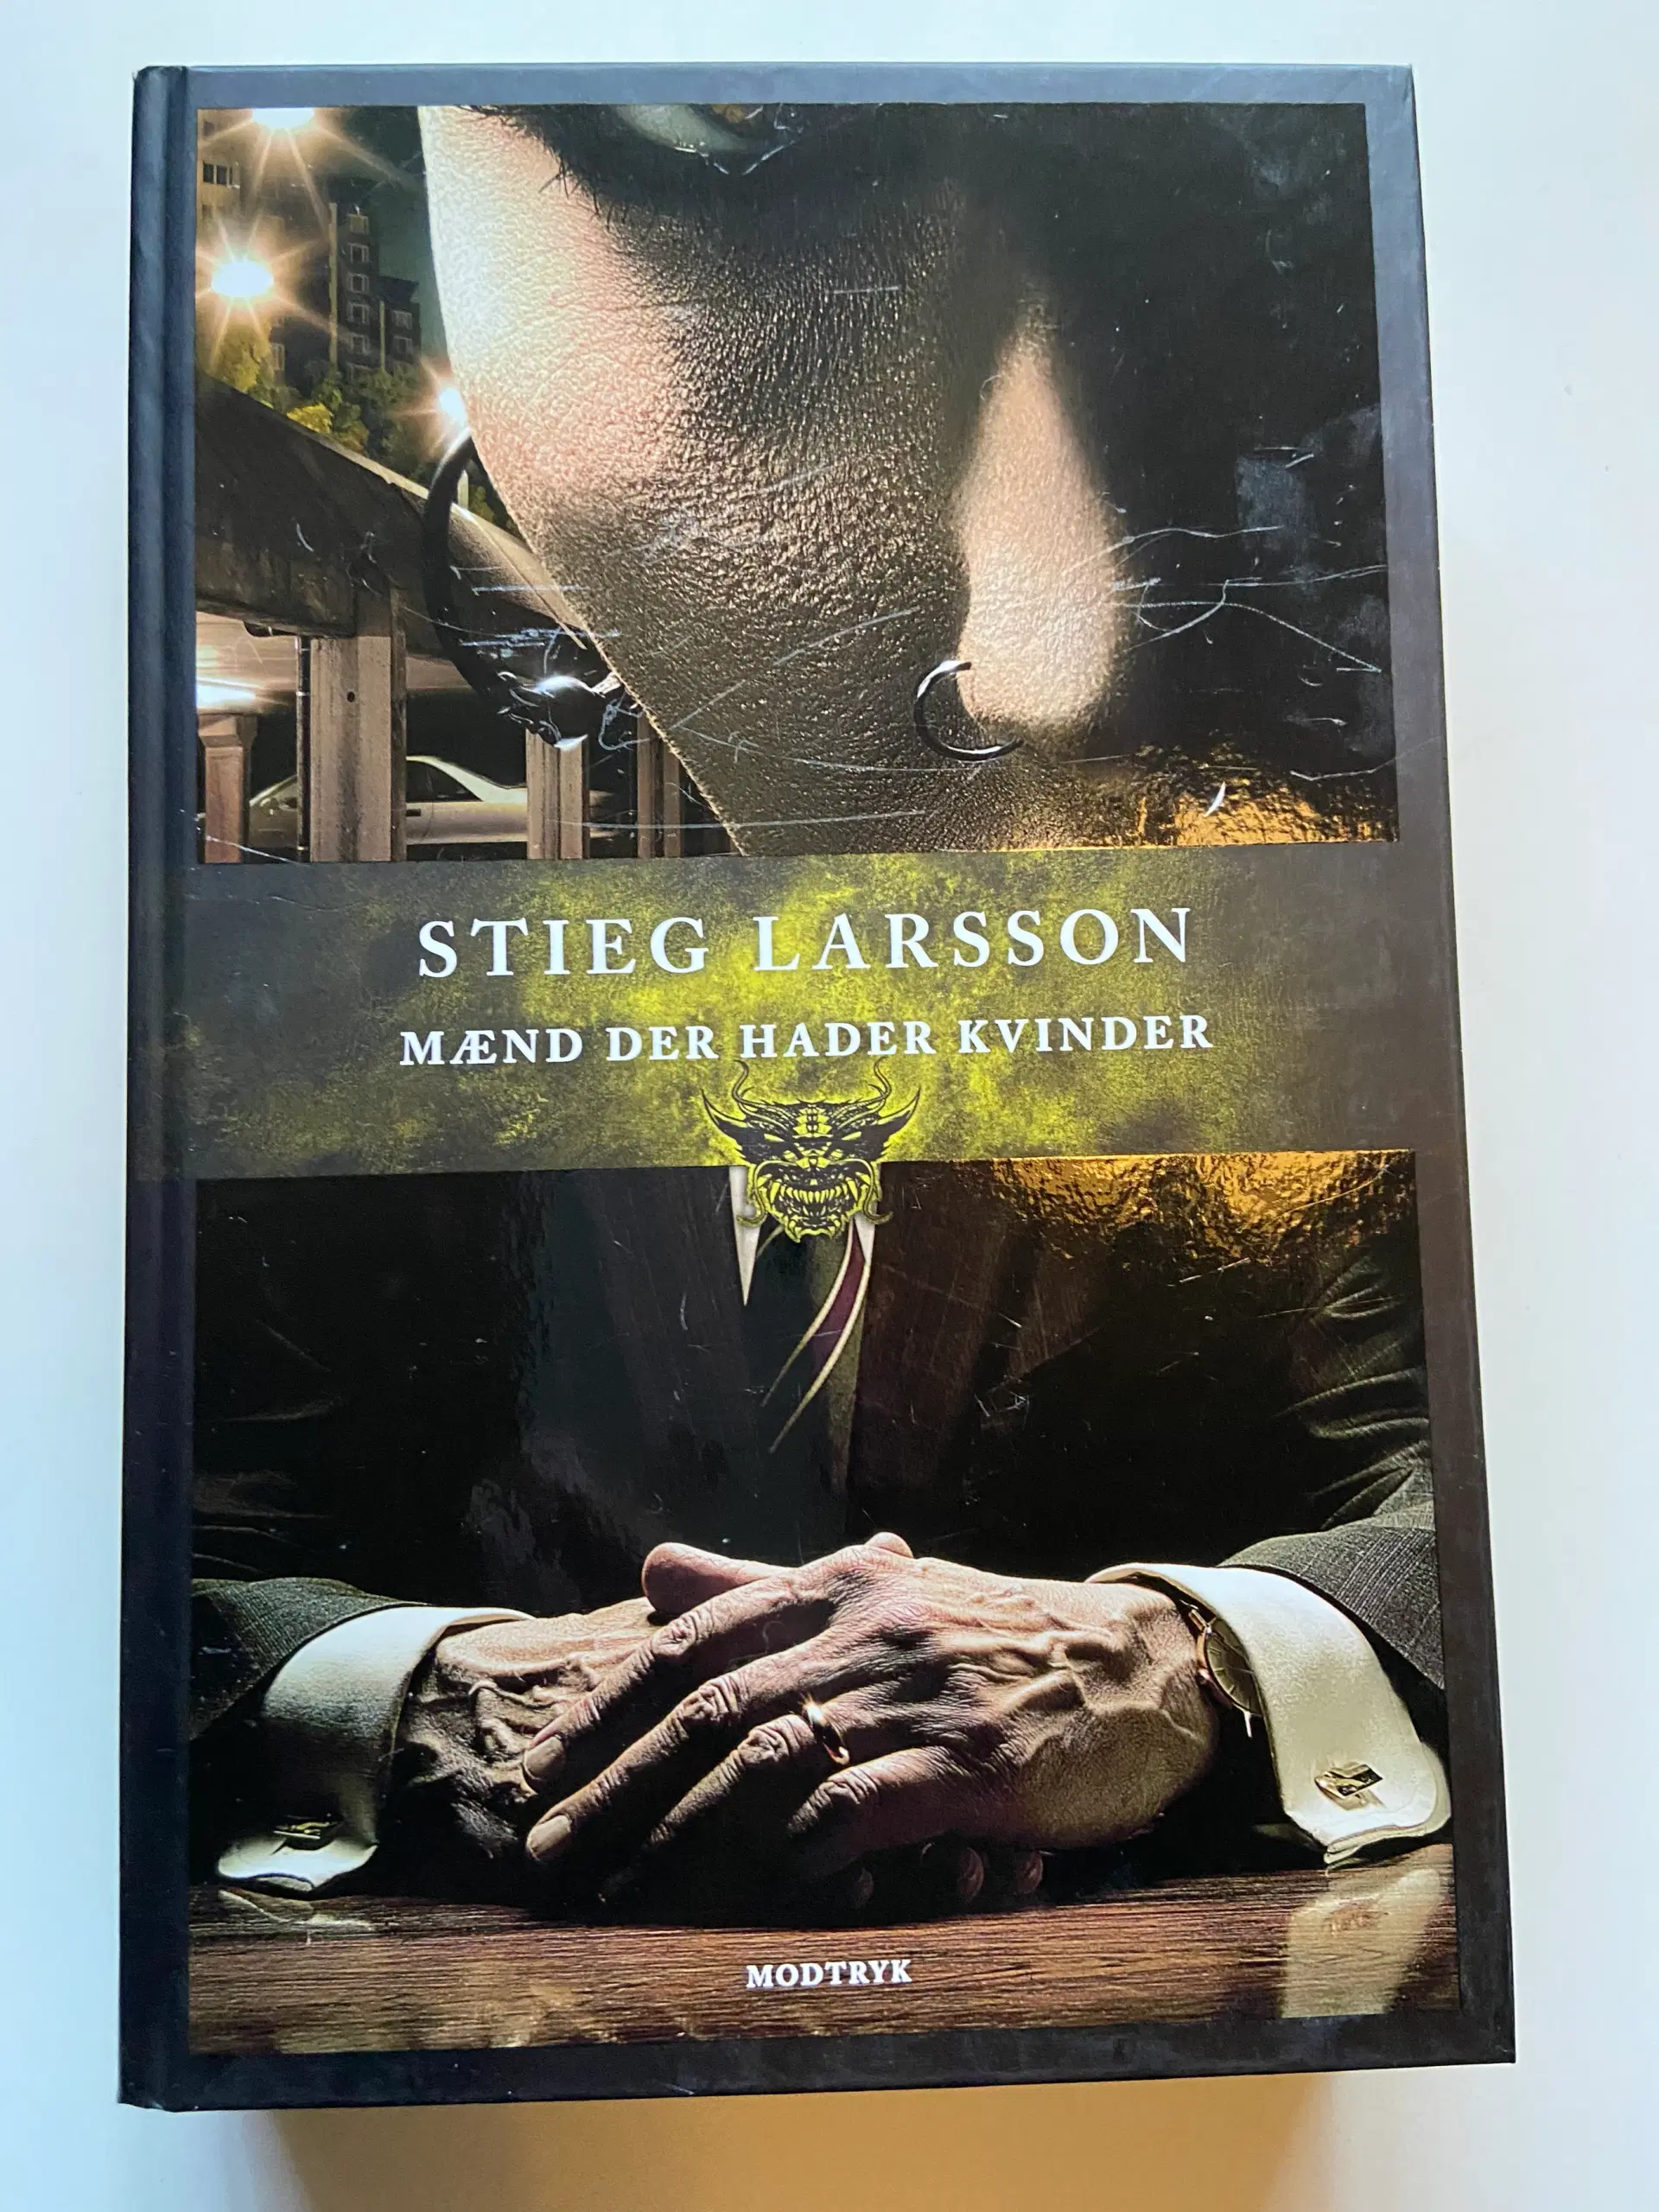 3 Stieg Larsson bøger 40- samlet